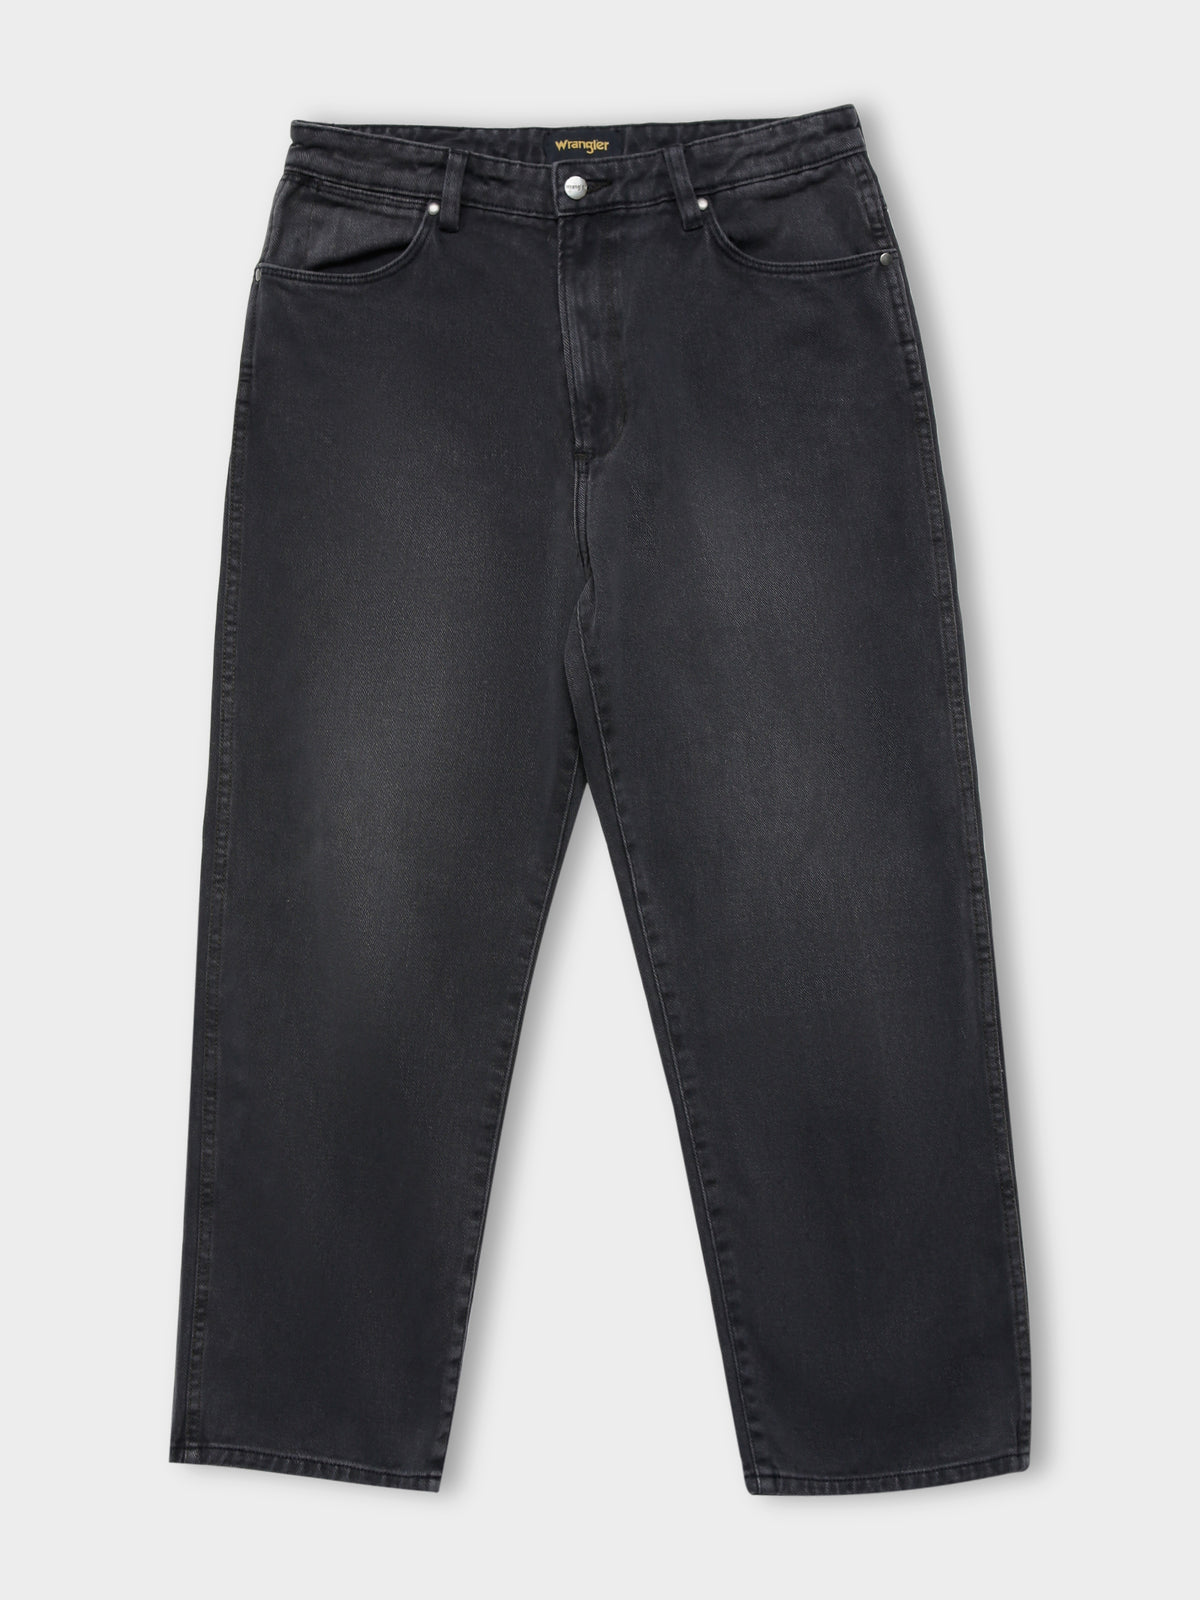 Slacker Jeans in Sayer Fade Black